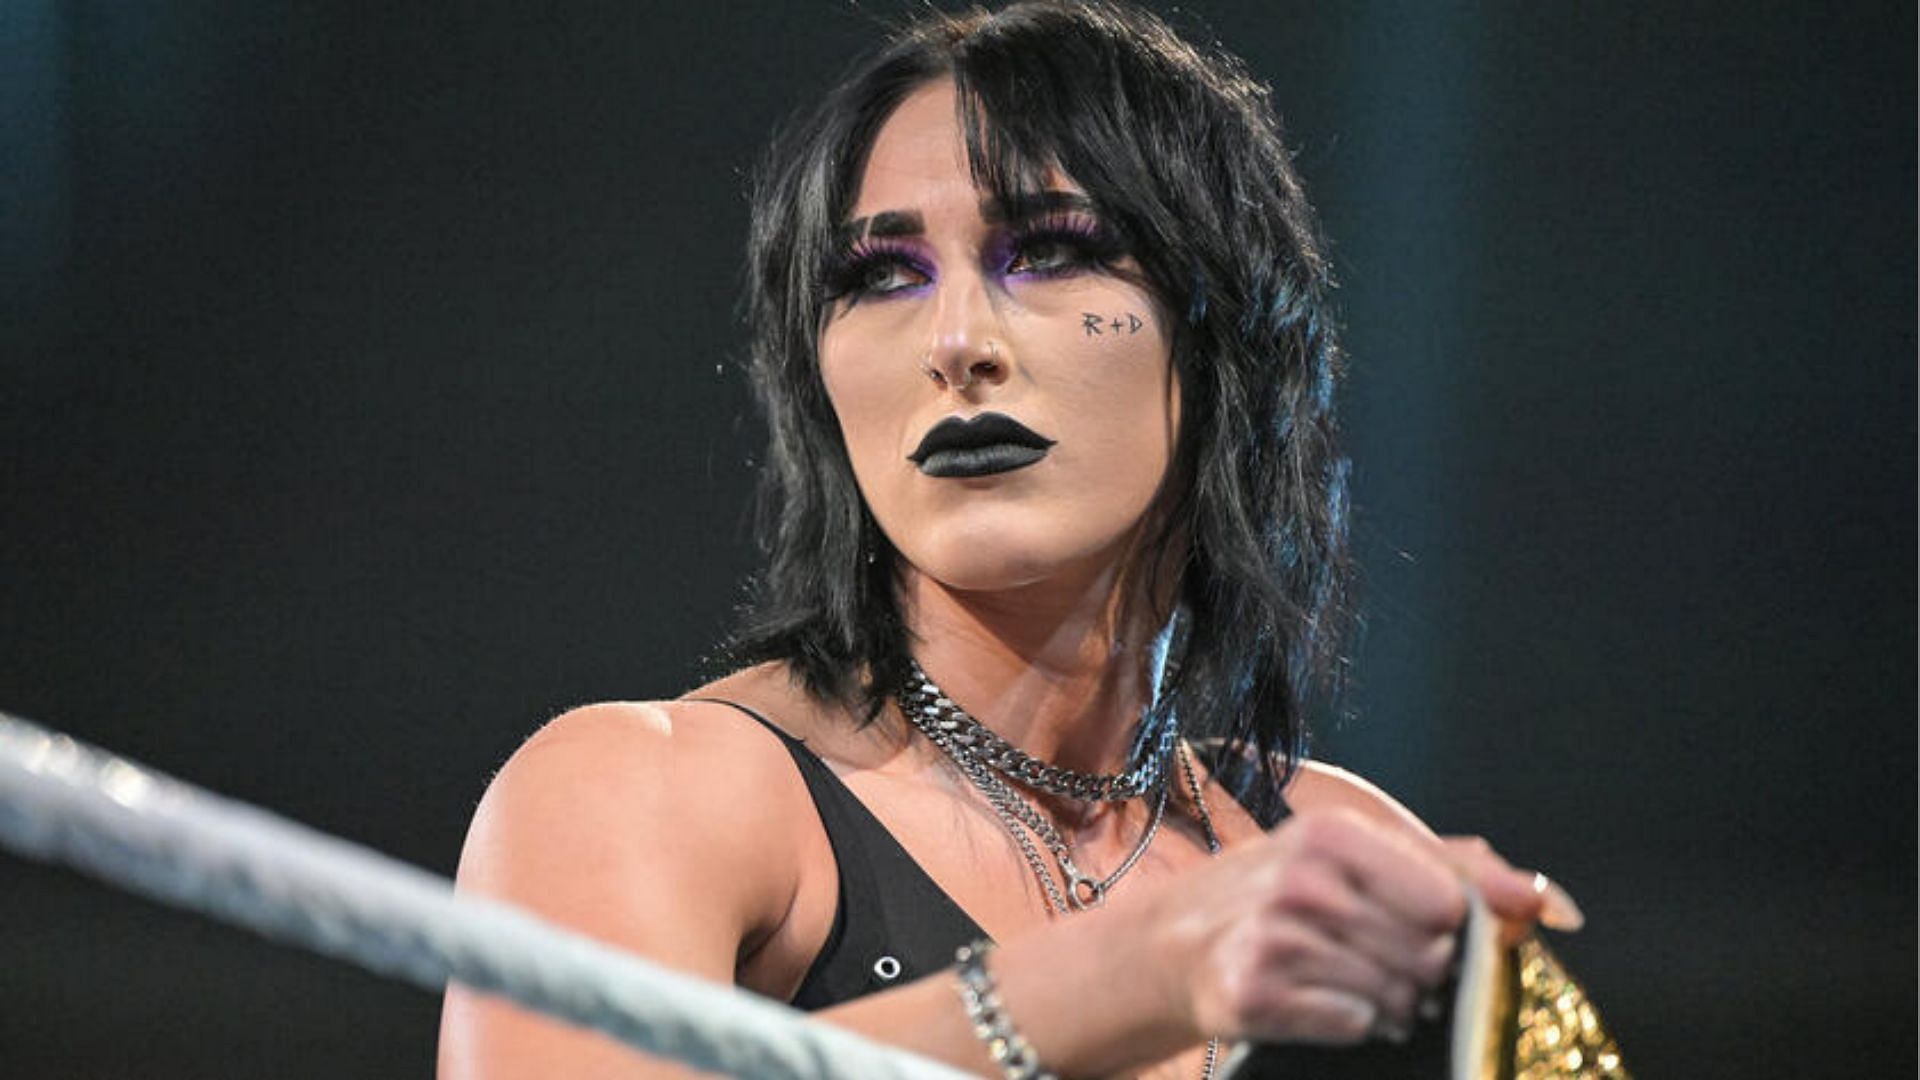 Rhea Ripley has been a dominant champion in WWE